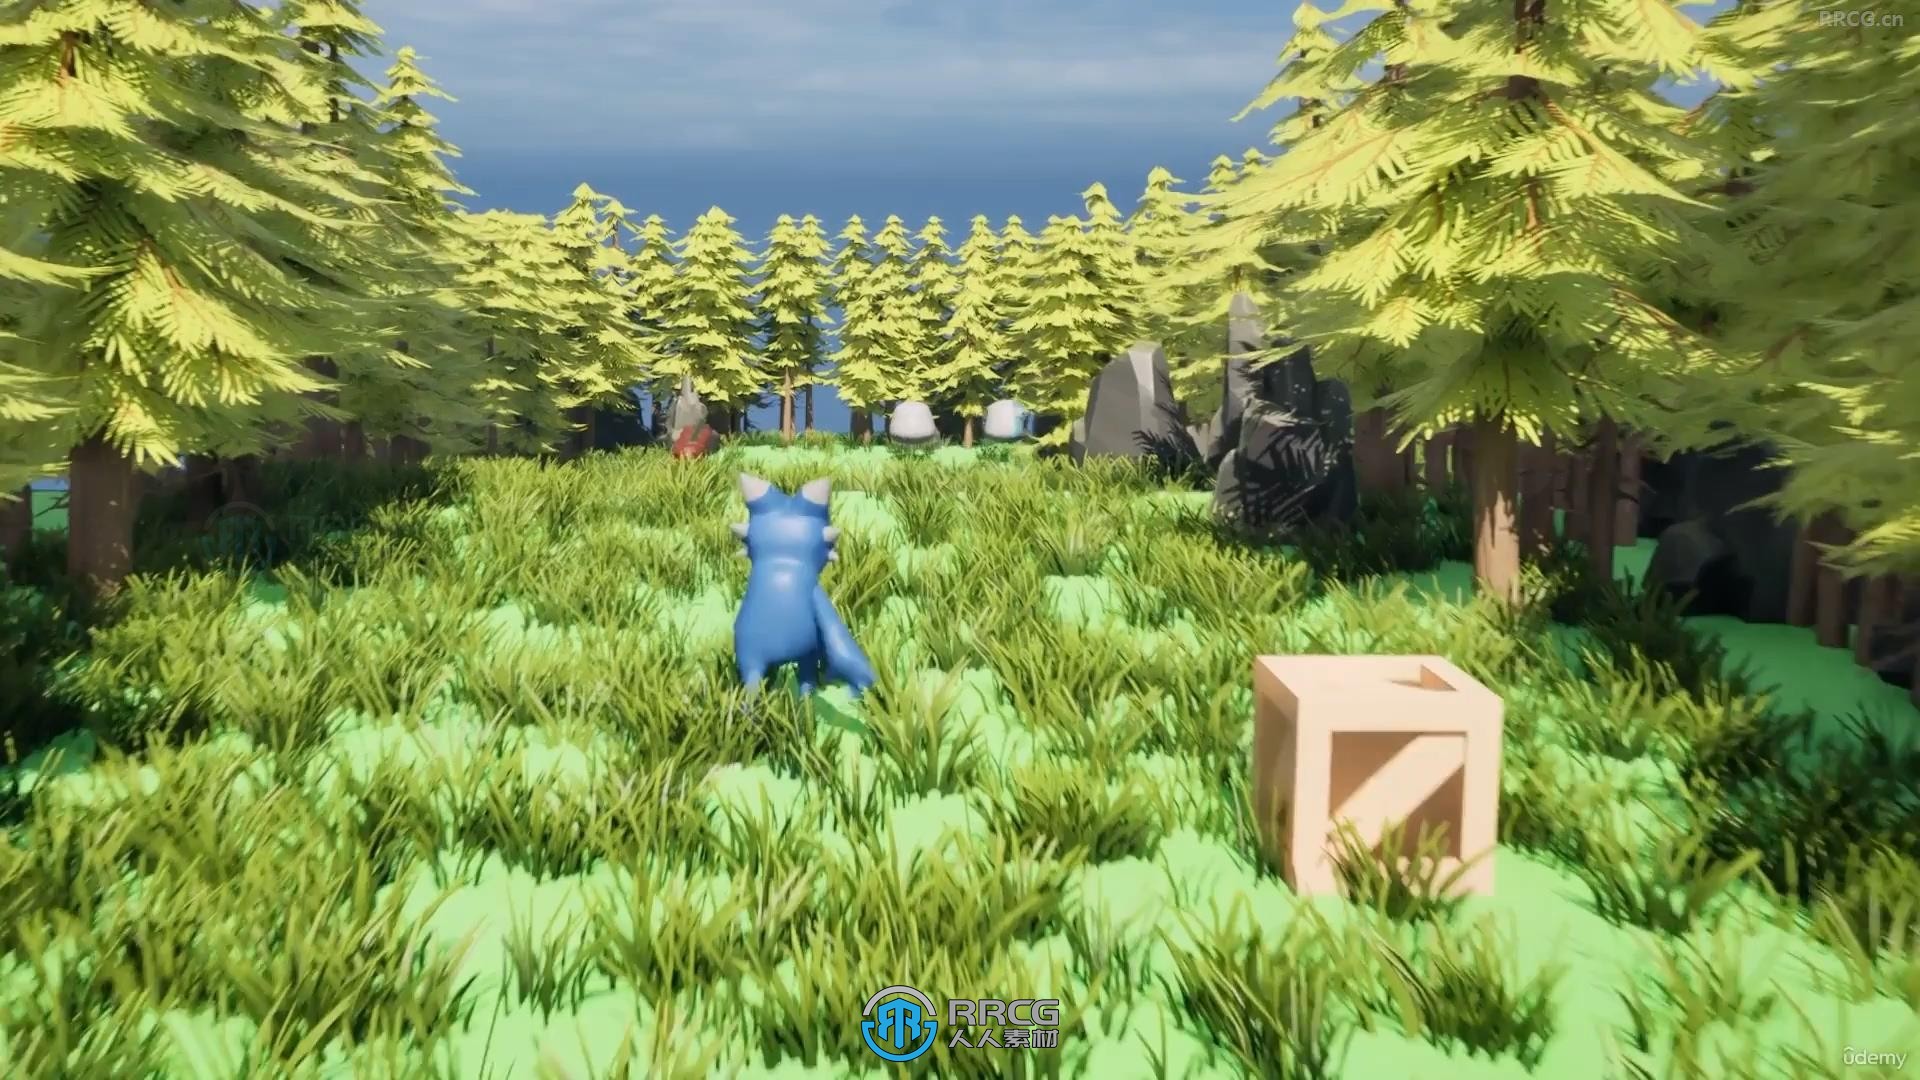 UE5虚幻引擎蓝图制作古惑狼风格3D游戏视频教程